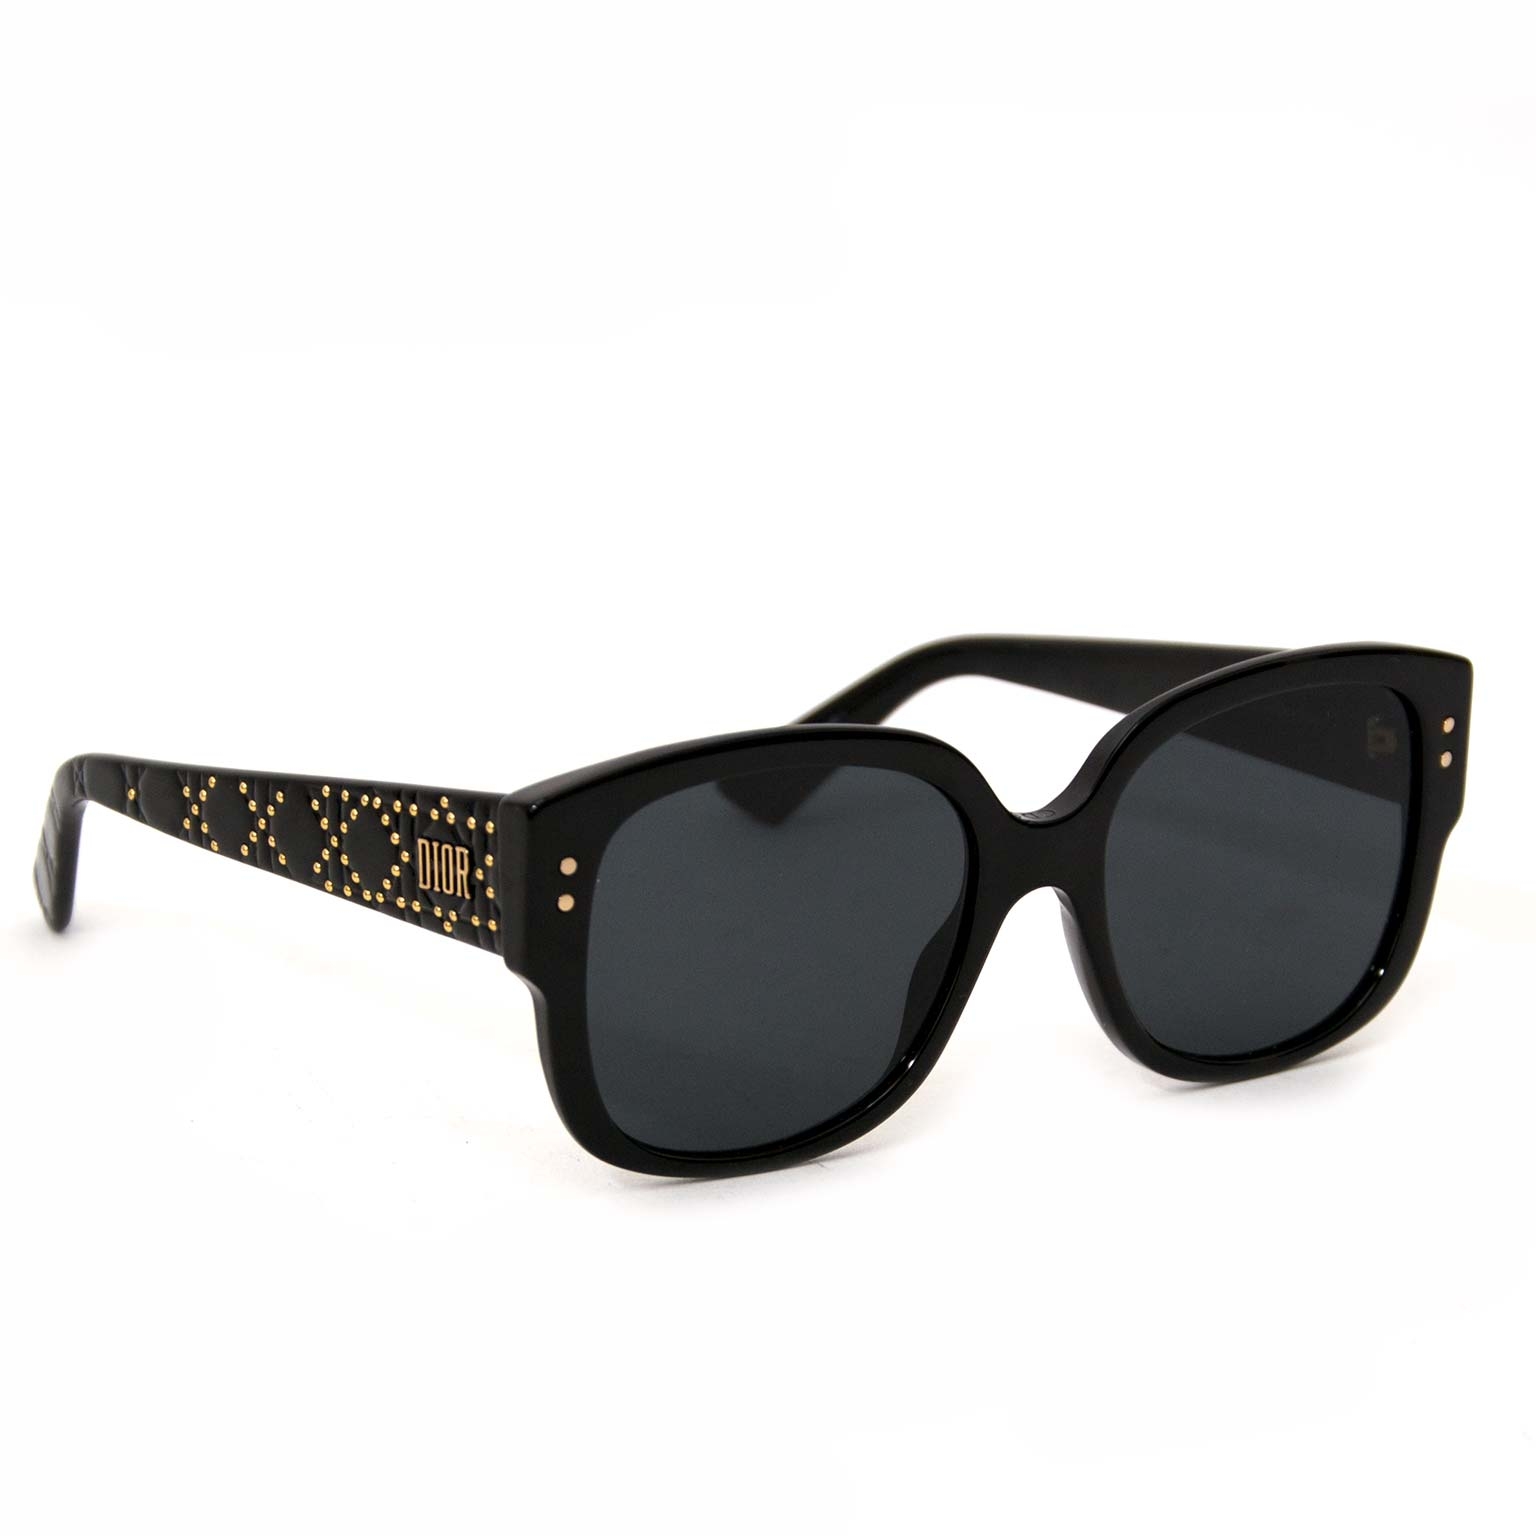 Leonie Hanne Wearing New Dior Signature Sunglasses | Dior sunglasses, Christian  dior fashion, Fashion sunglasses